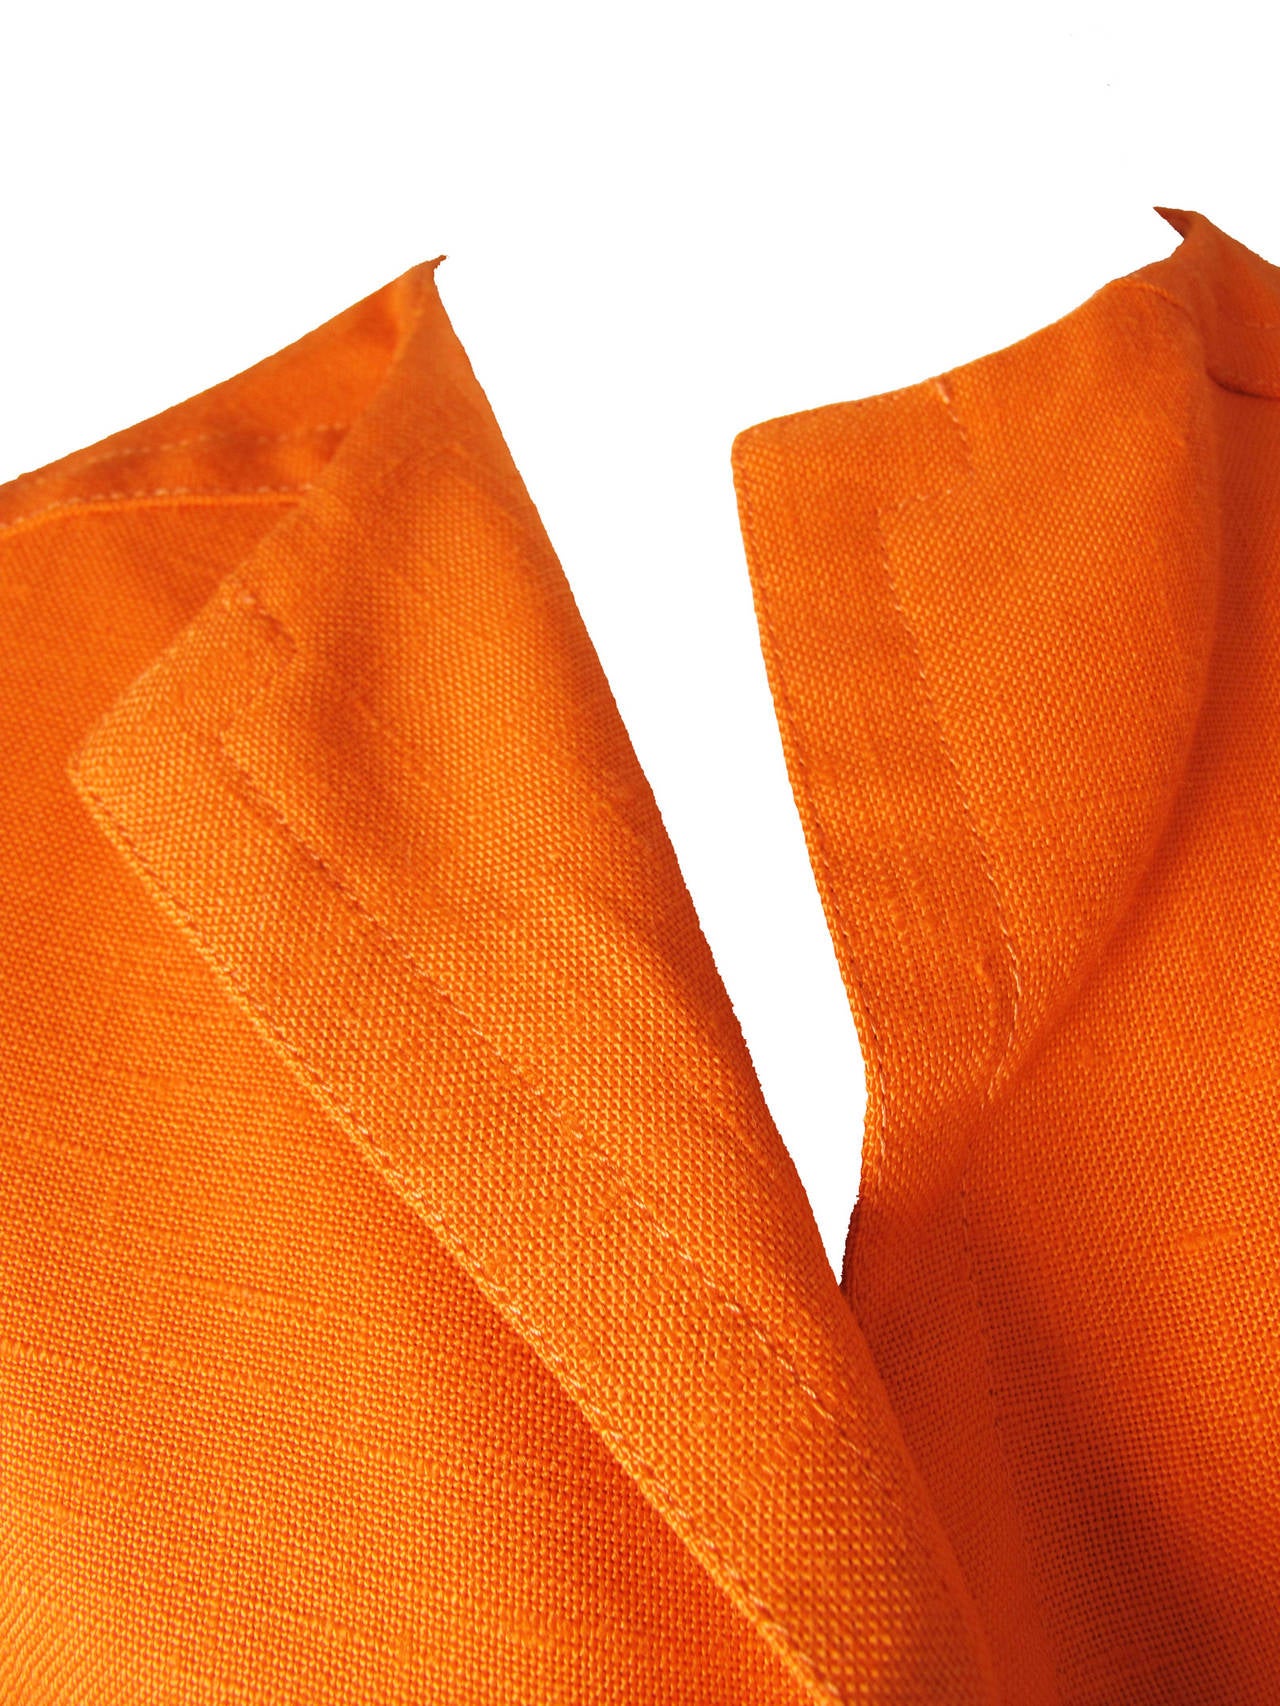 Geoffrey Beene orange linen jacket with two front pockets.  36